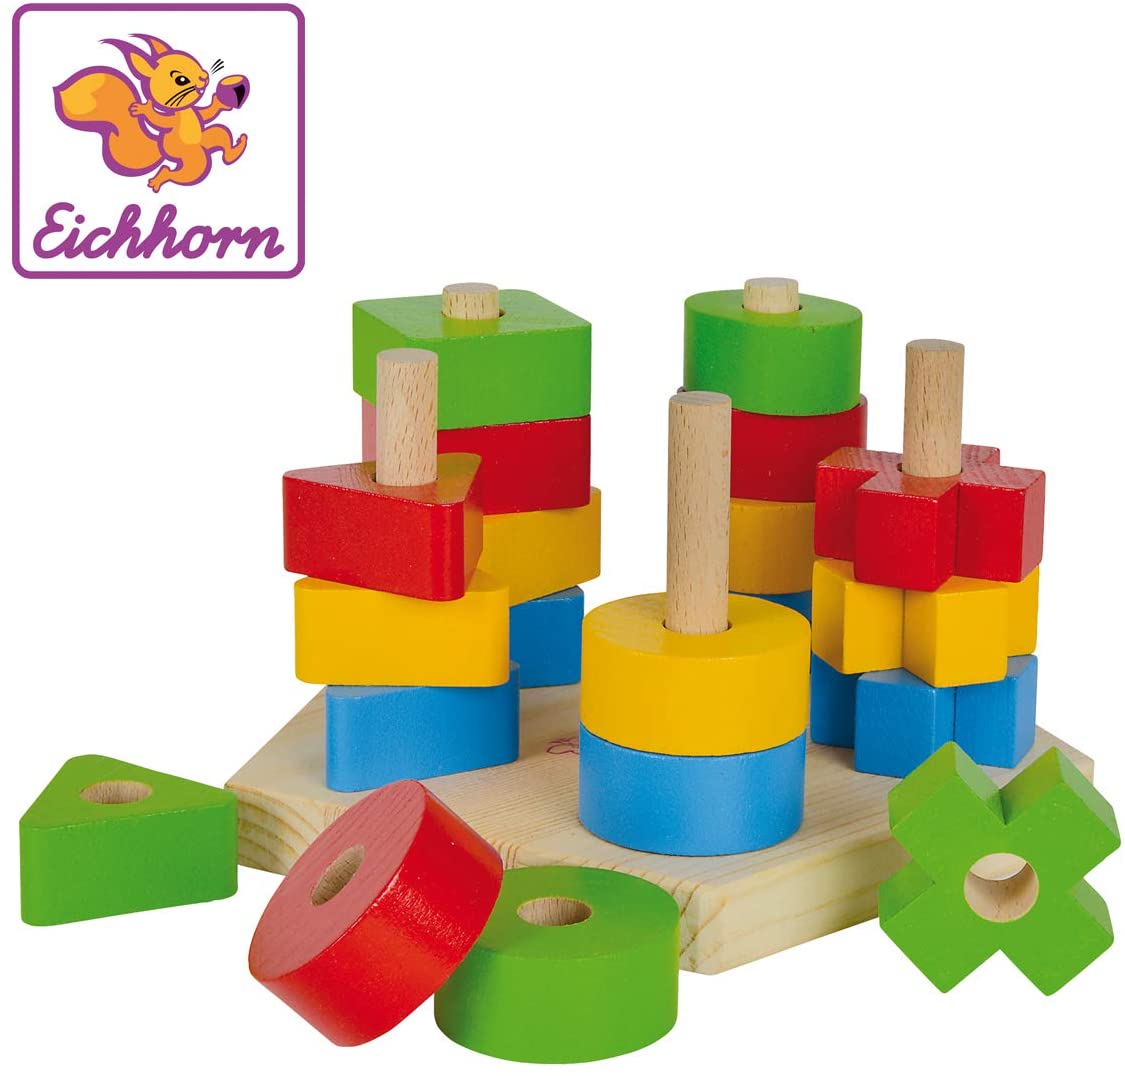 Eichhorn - Wooden toy plug-plate 21pcs